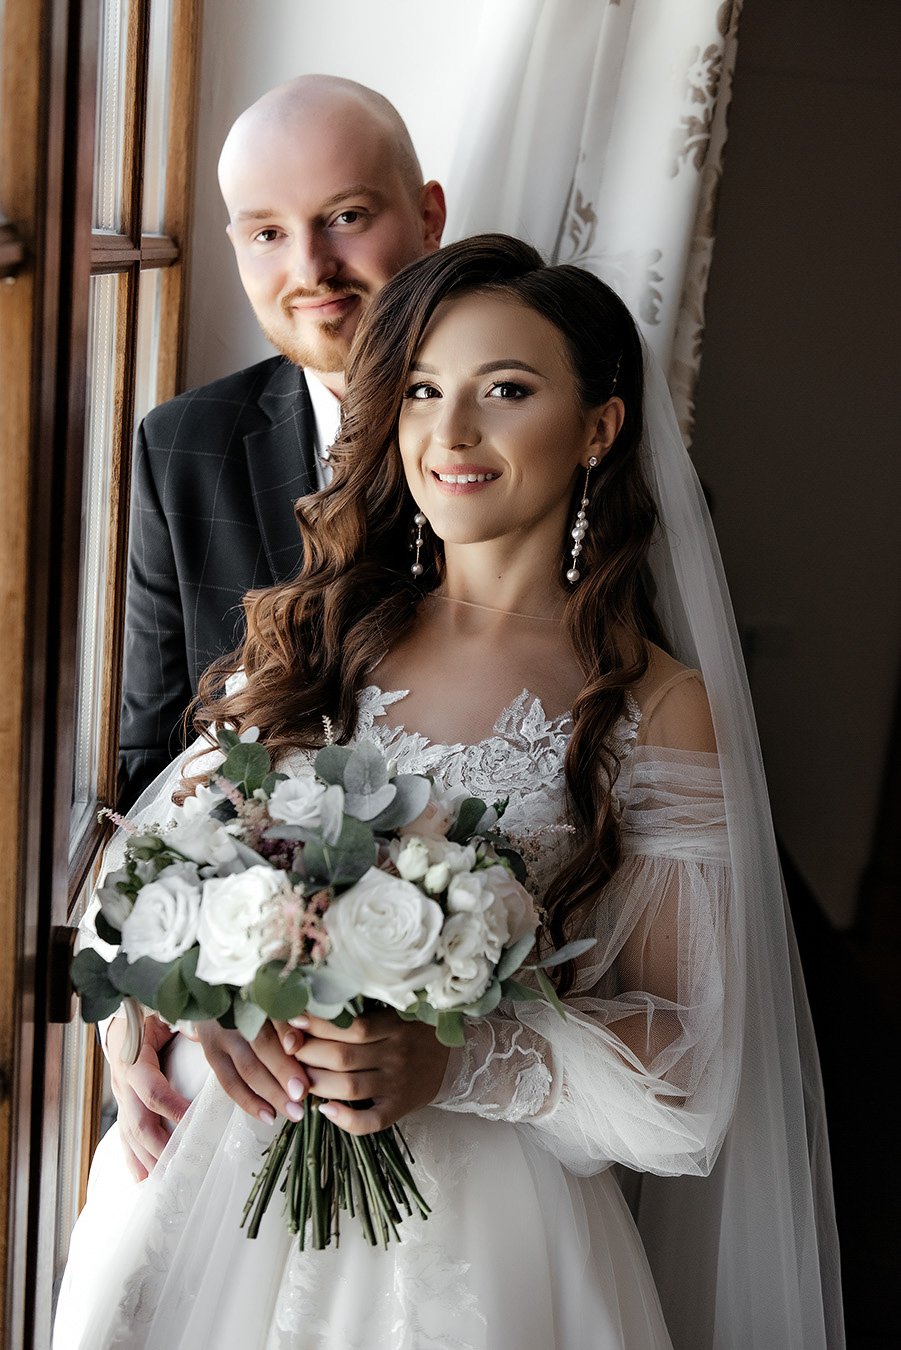 Prague Wedding Photoshoot